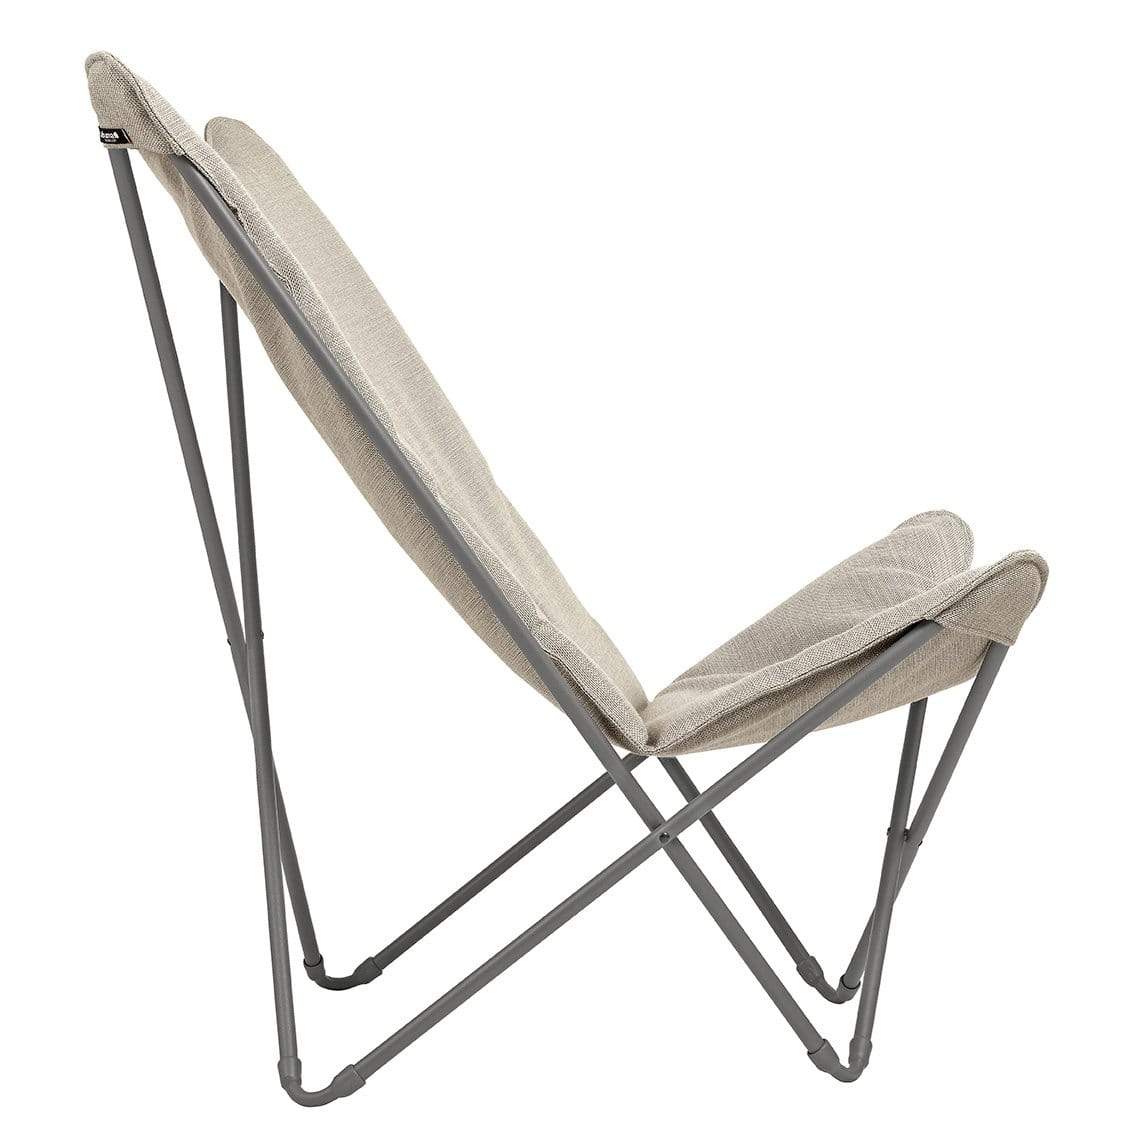 HomeRoots Outdoors Beach Chairs Latte / Frame: Galvanized steel; Fabric: Hedona Lounge Chair - Titane Steel Frame - Latte Hedona Fabric